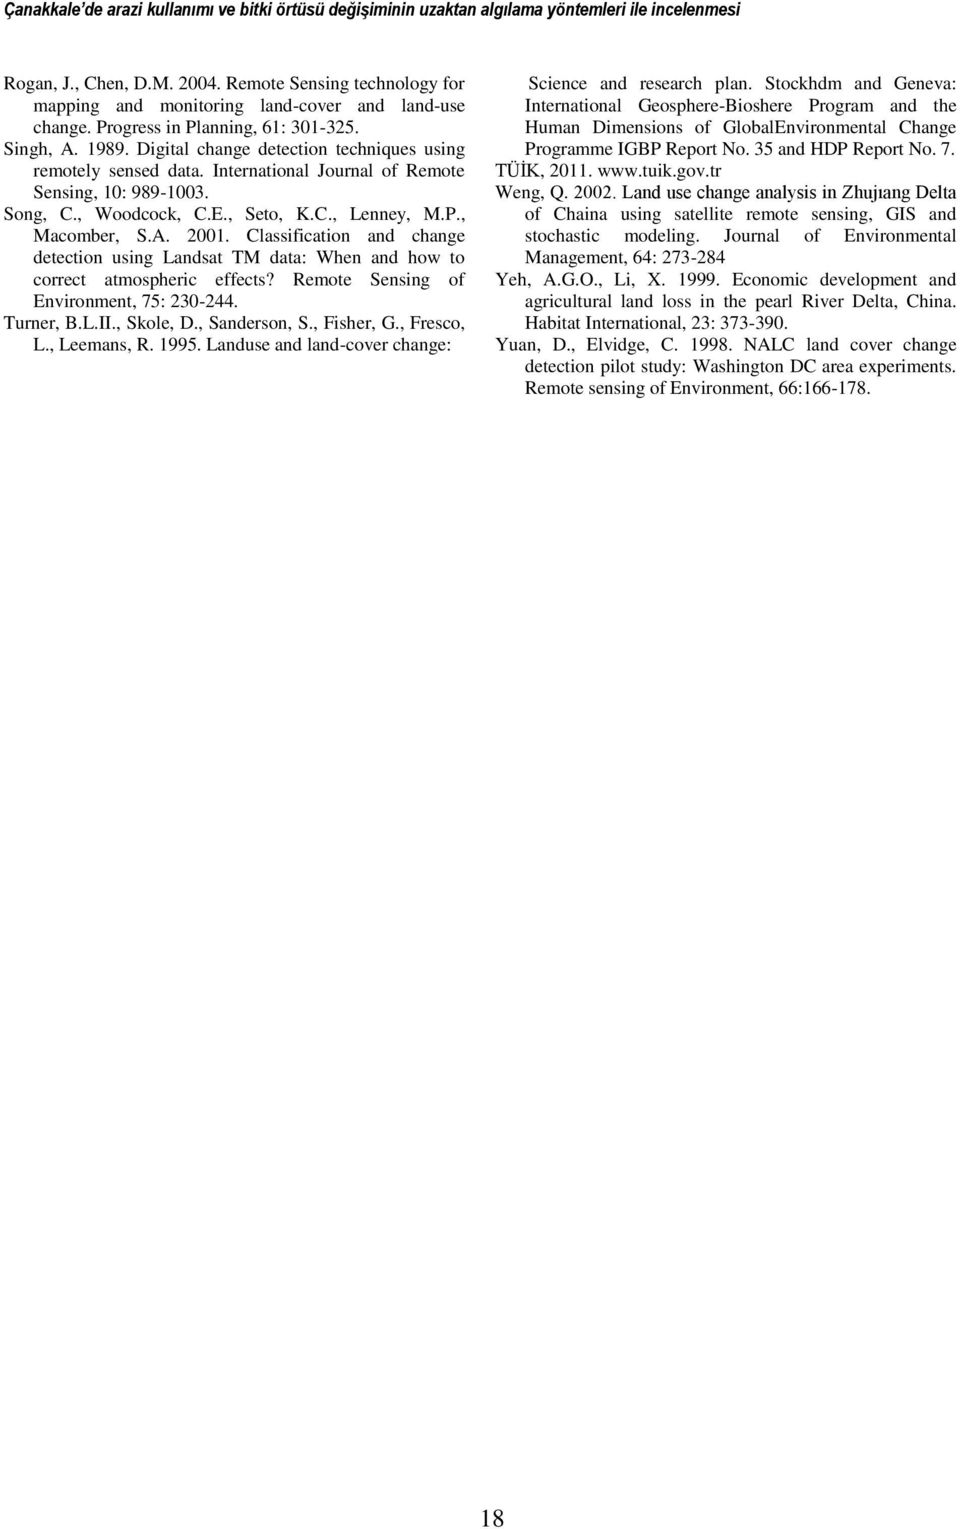 International Journal of Remote Sensing, 10: 989-1003. Song, C., Woodcock, C.E., Seto, K.C., Lenney, M.P., Macomber, S.A. 2001.